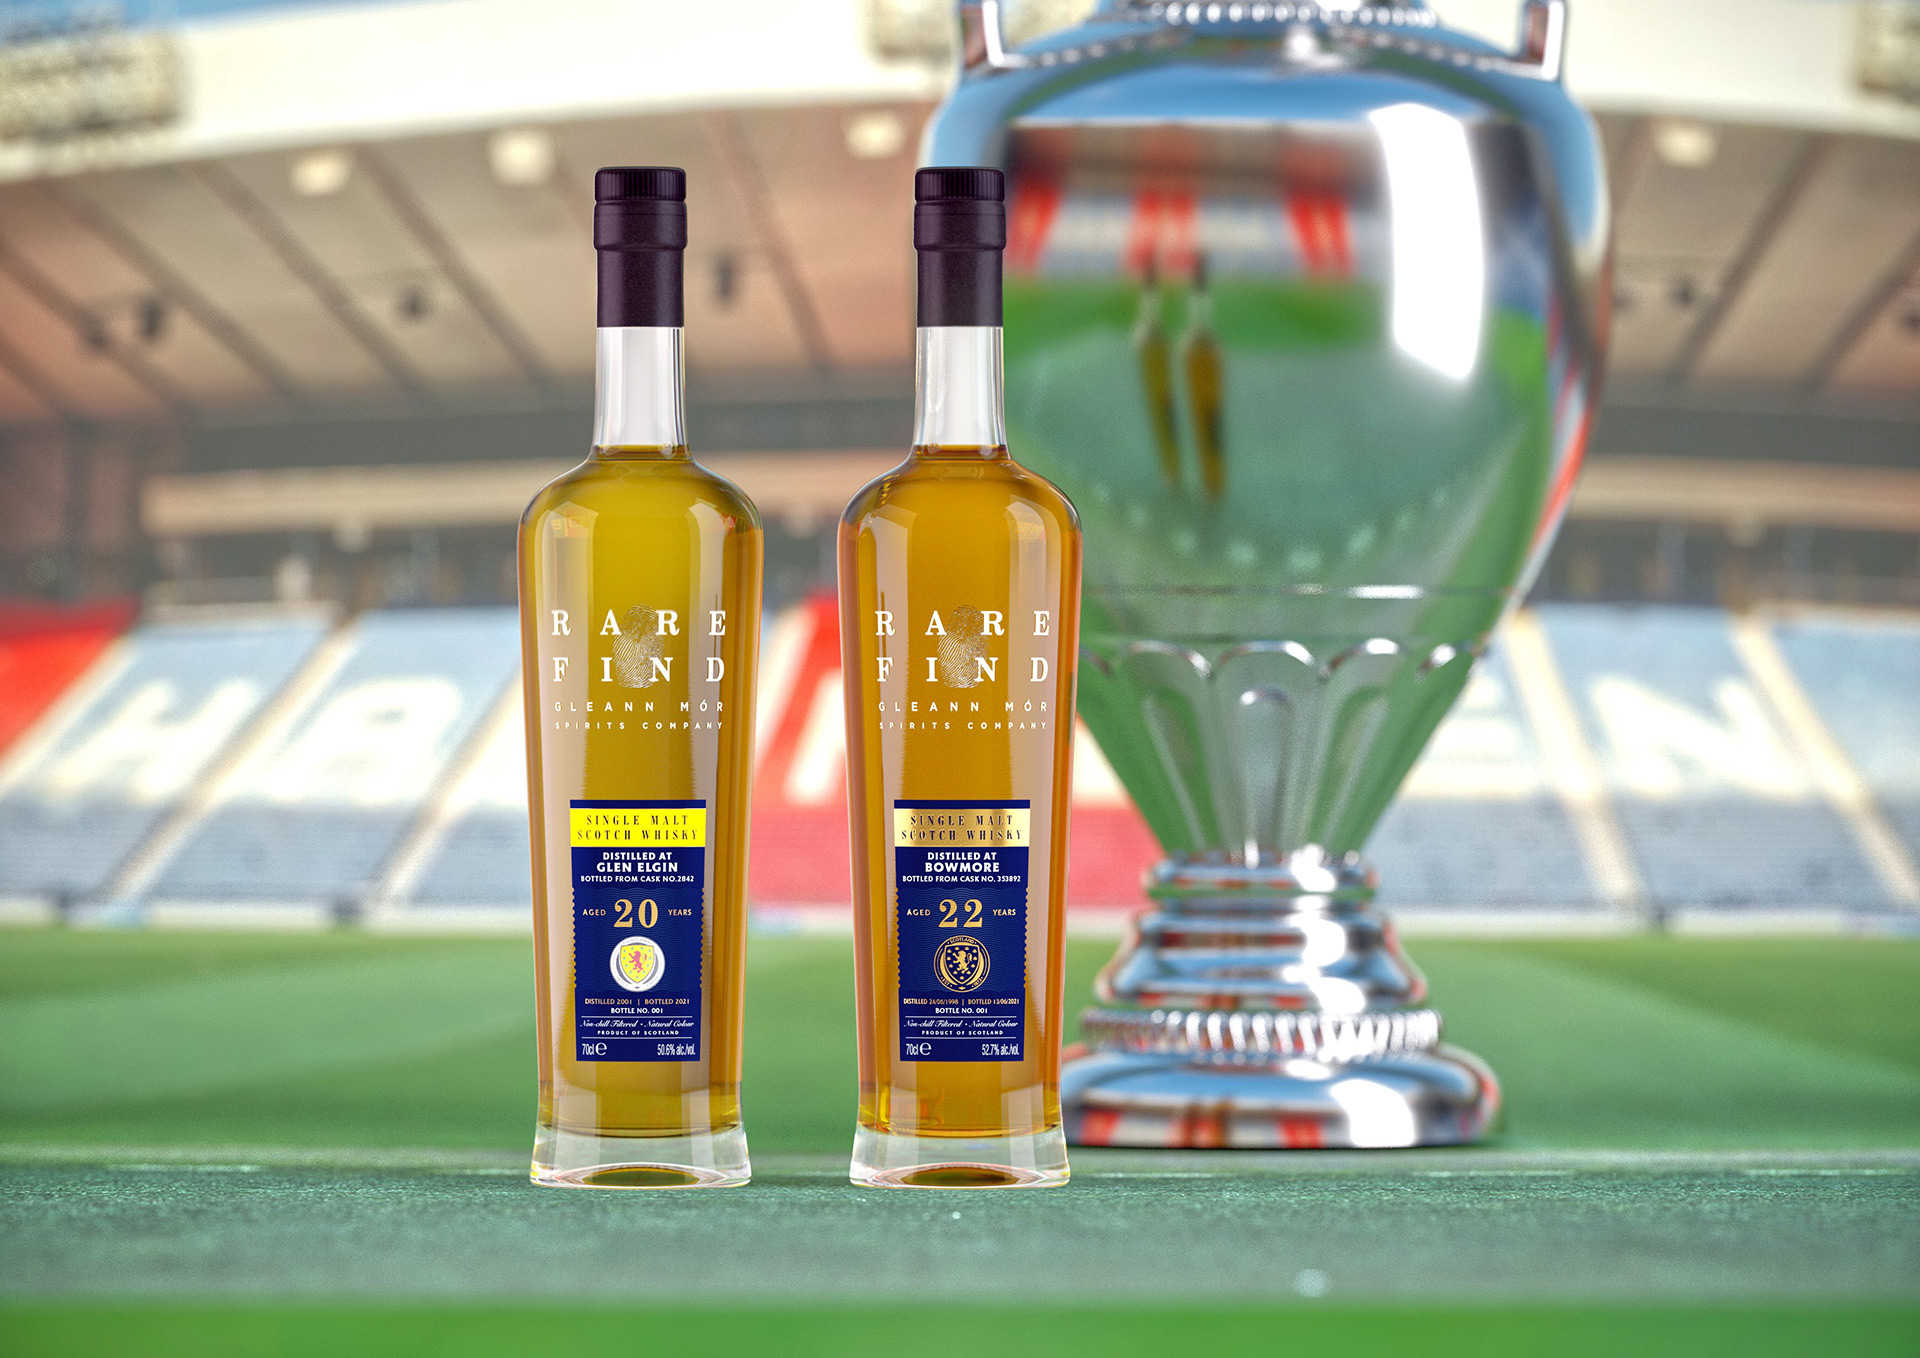 Scottish National Team Whisky